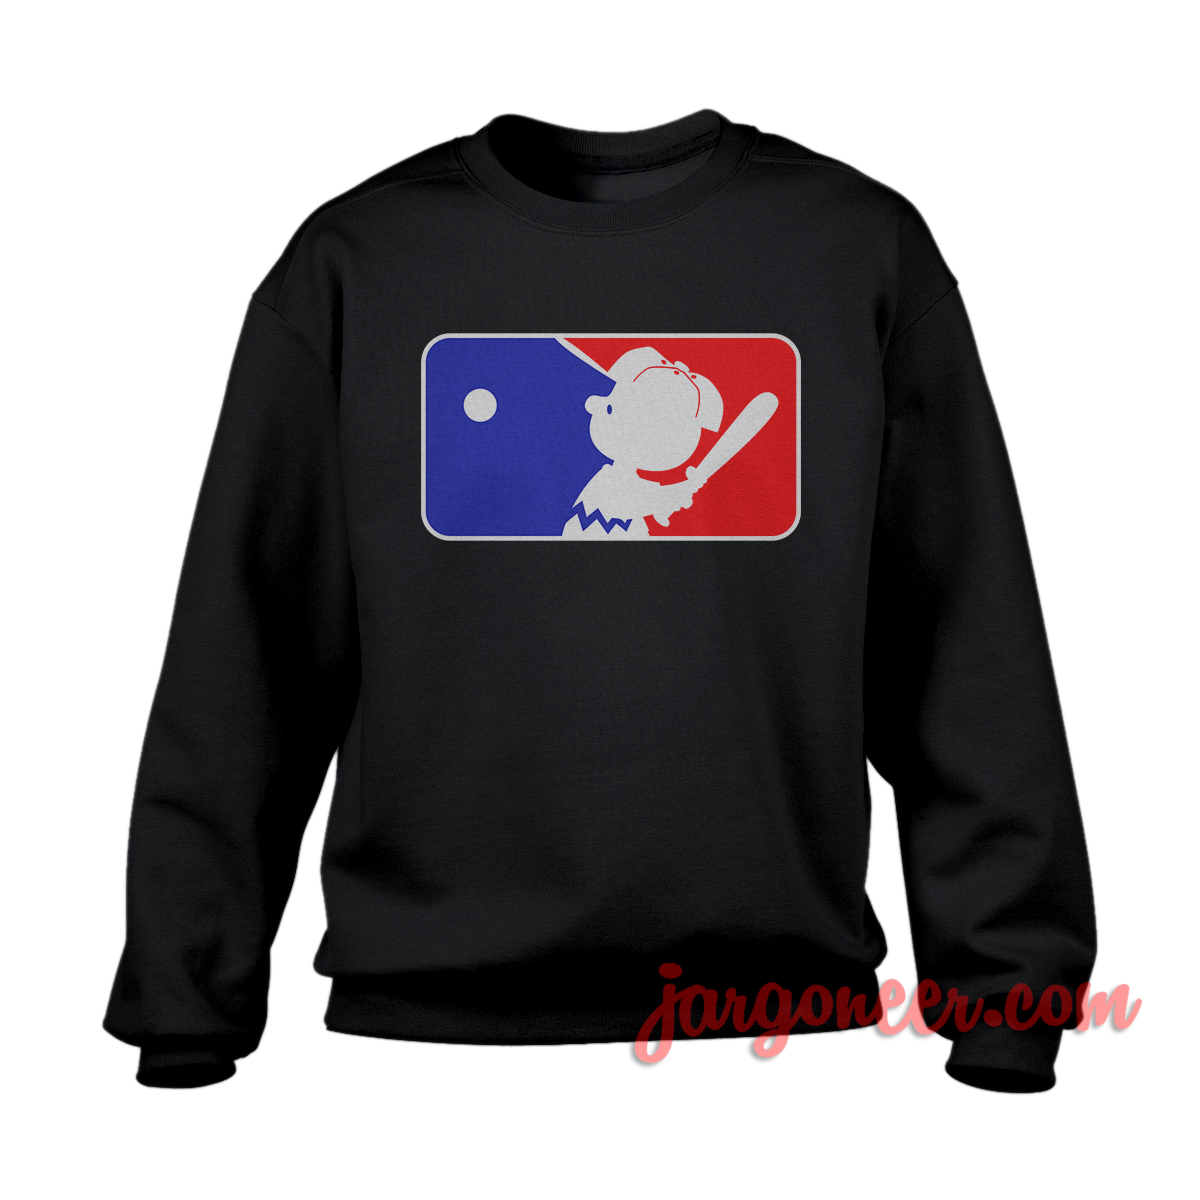 Baseball Charlie Black SS 1 - Shop Unique Graphic Cool Shirt Designs